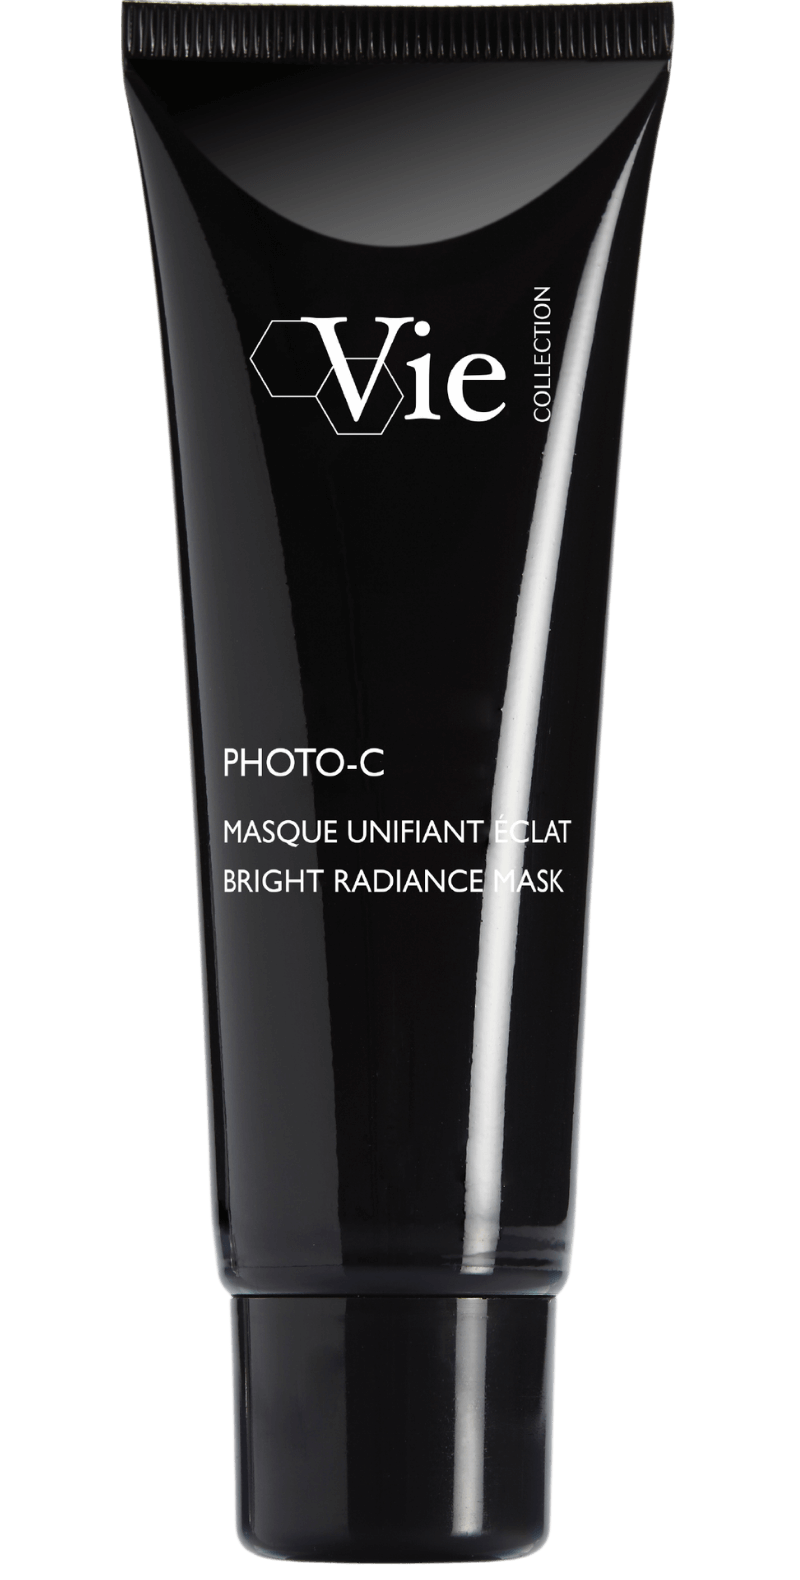 's Vie Photo-C Bright Radiance Mask - Bellini's Skin and Parfumerie 